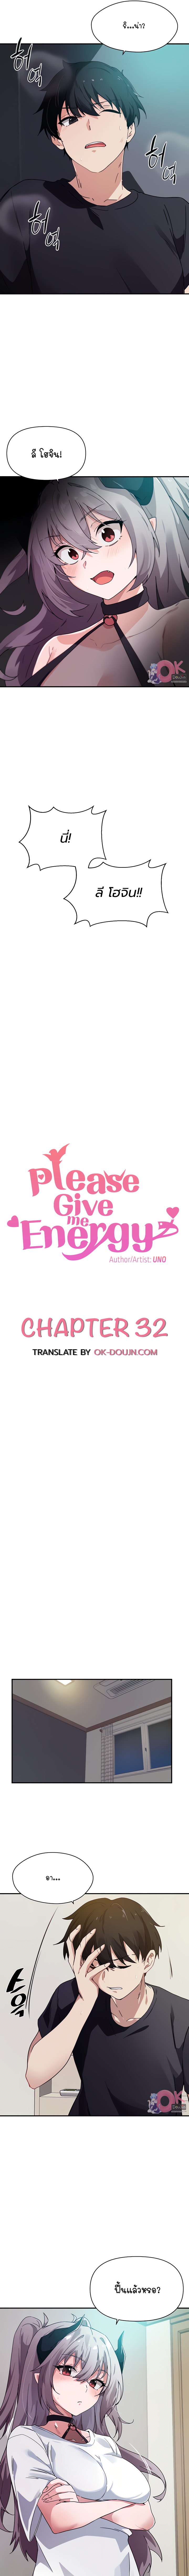 Please Give Me Energy 32 04